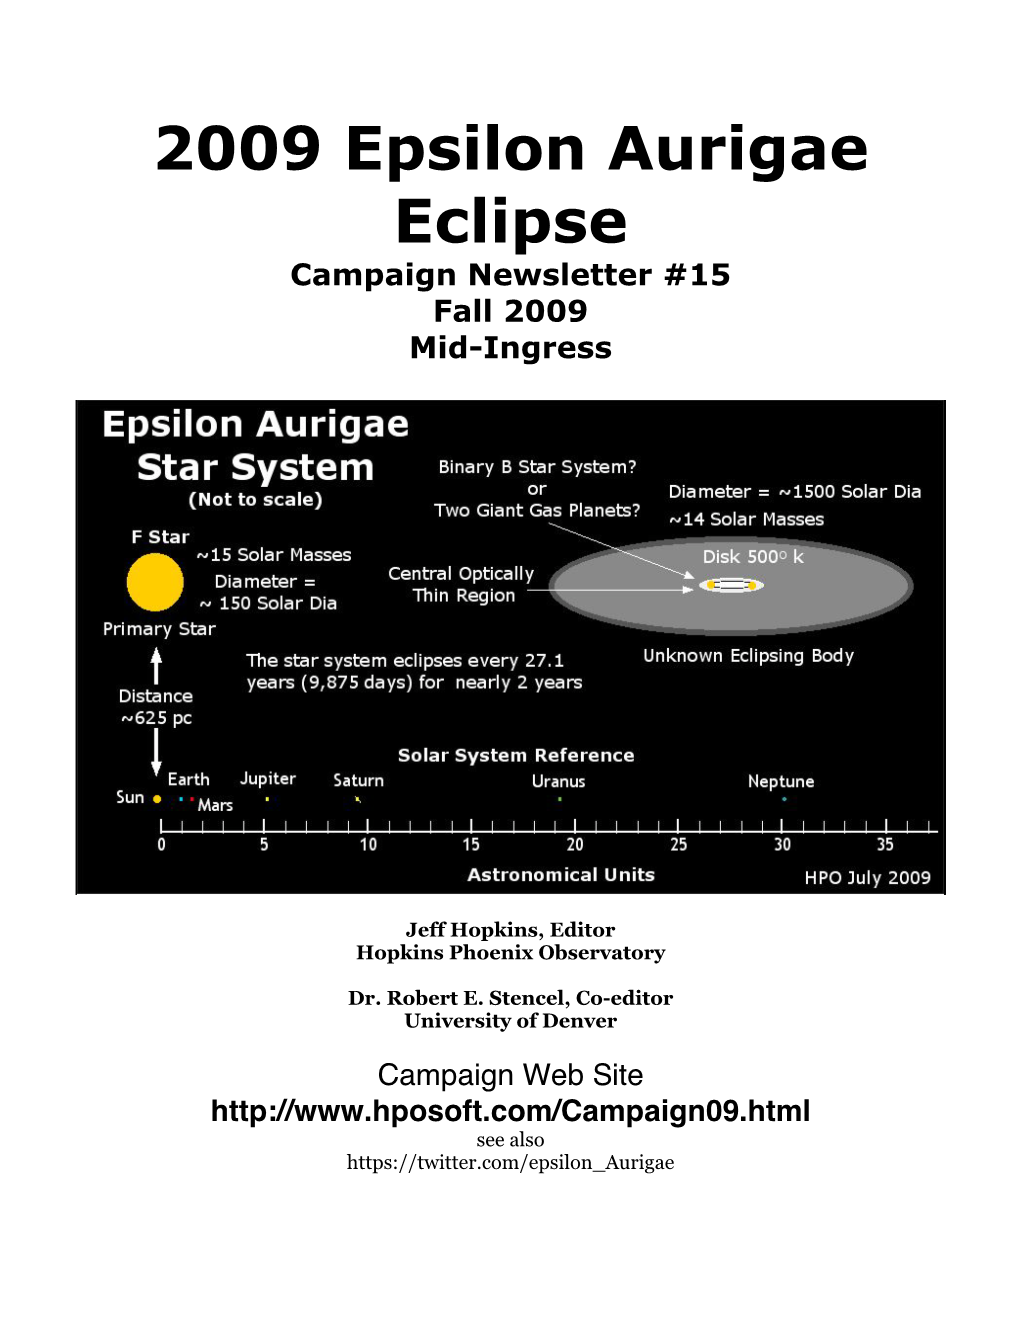 2009 Epsilon Aurigae Eclipse Campaign Newsletter #15 Fall 2009 Mid-Ingress